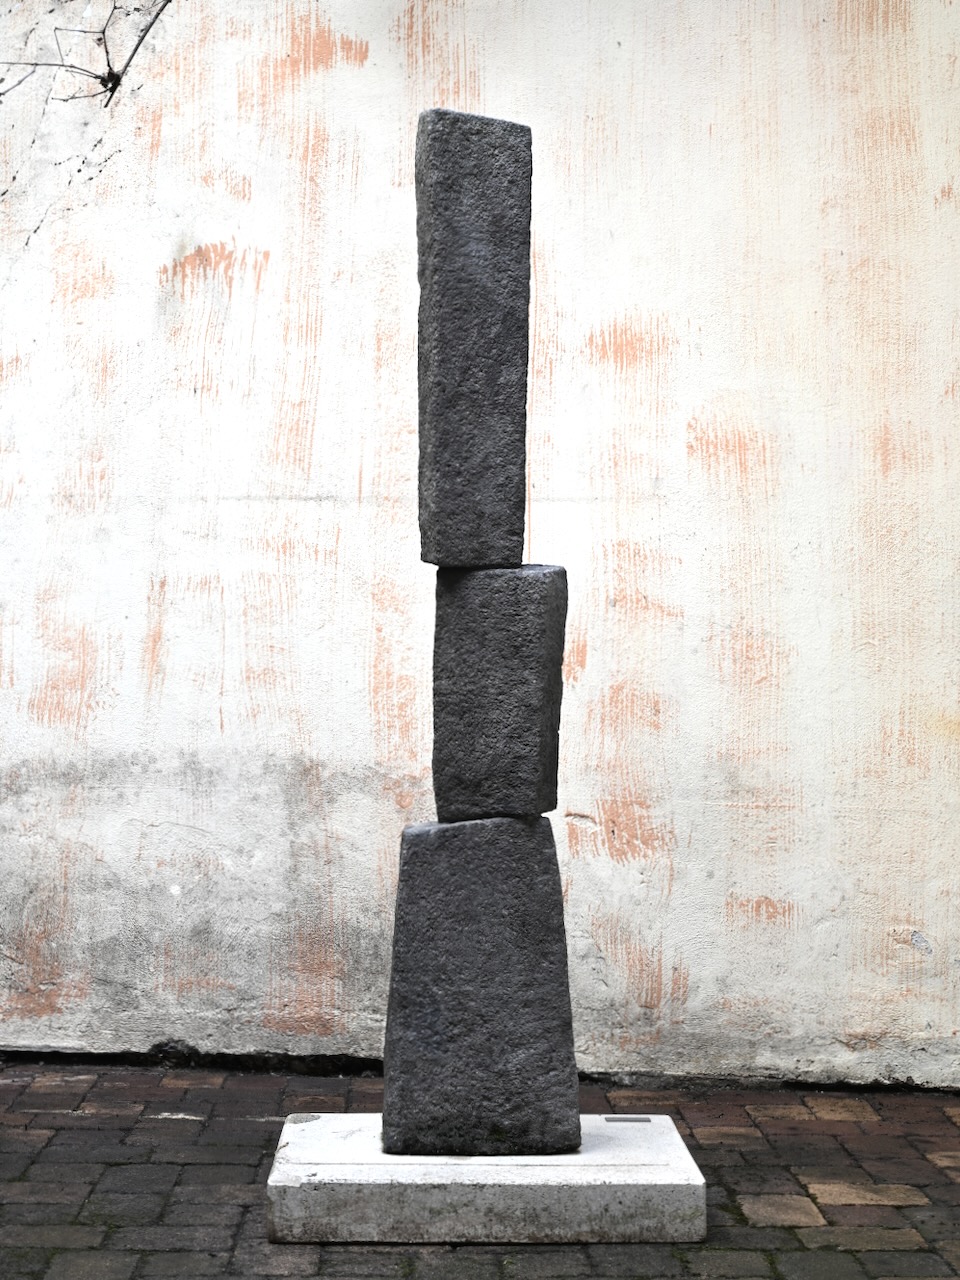 Verlass, 2018, gunite, 176 x 28 x 18 cm